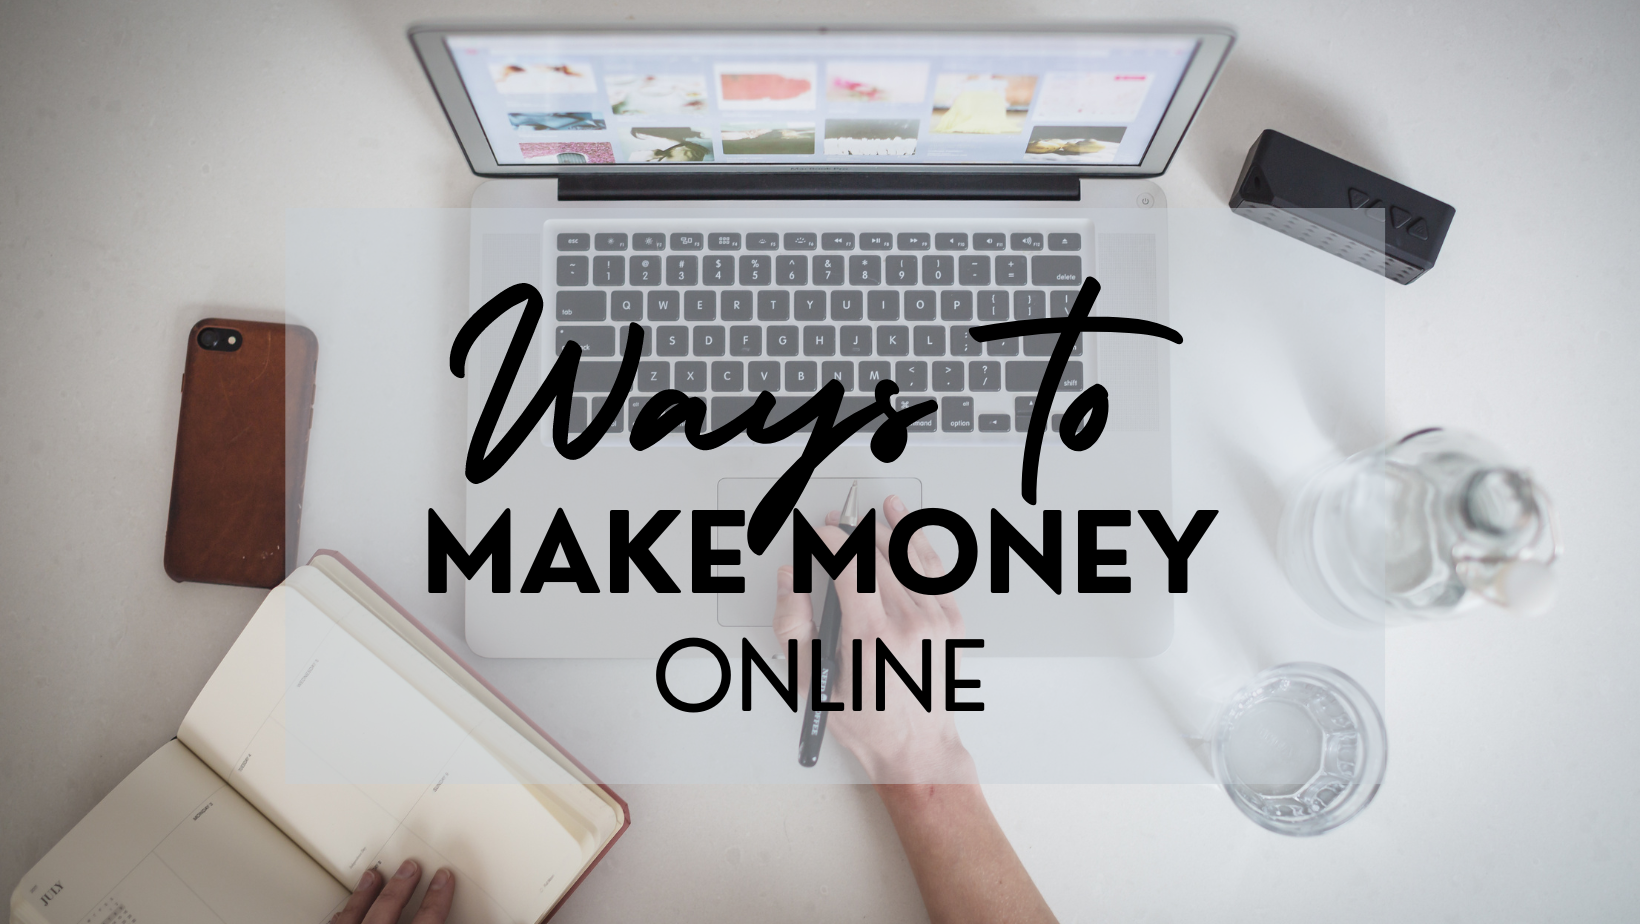 Ways to make money online poster image